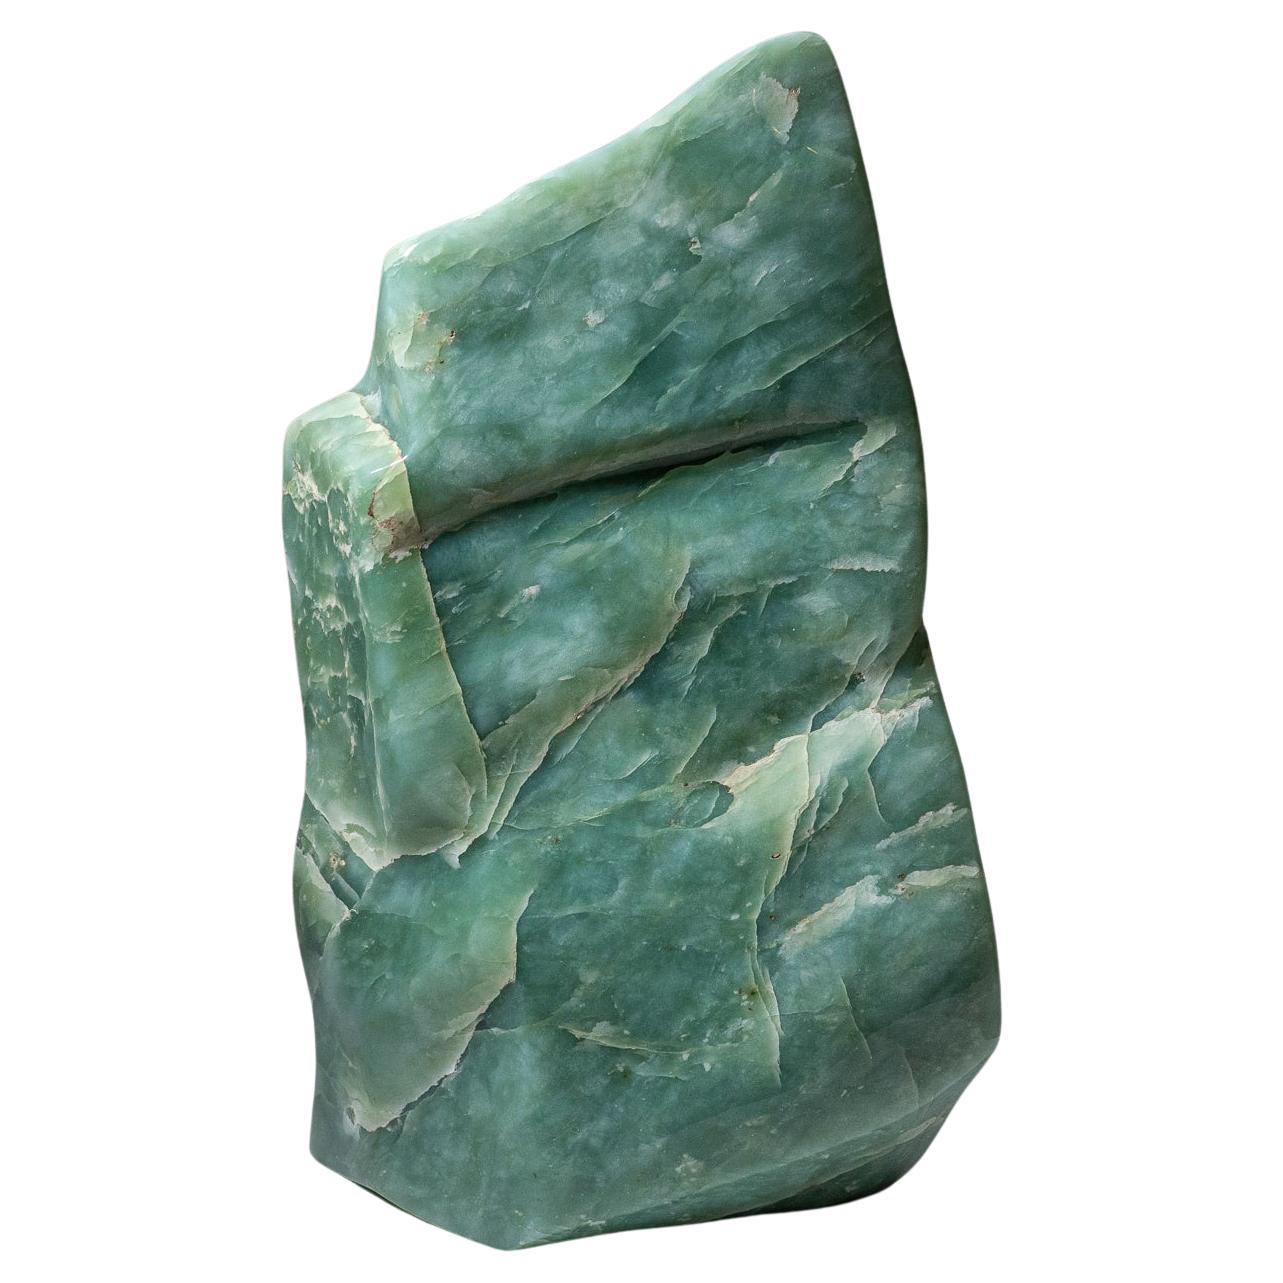 Polished Nephrite Jade Freeform from Pakistan '12 Lbs'